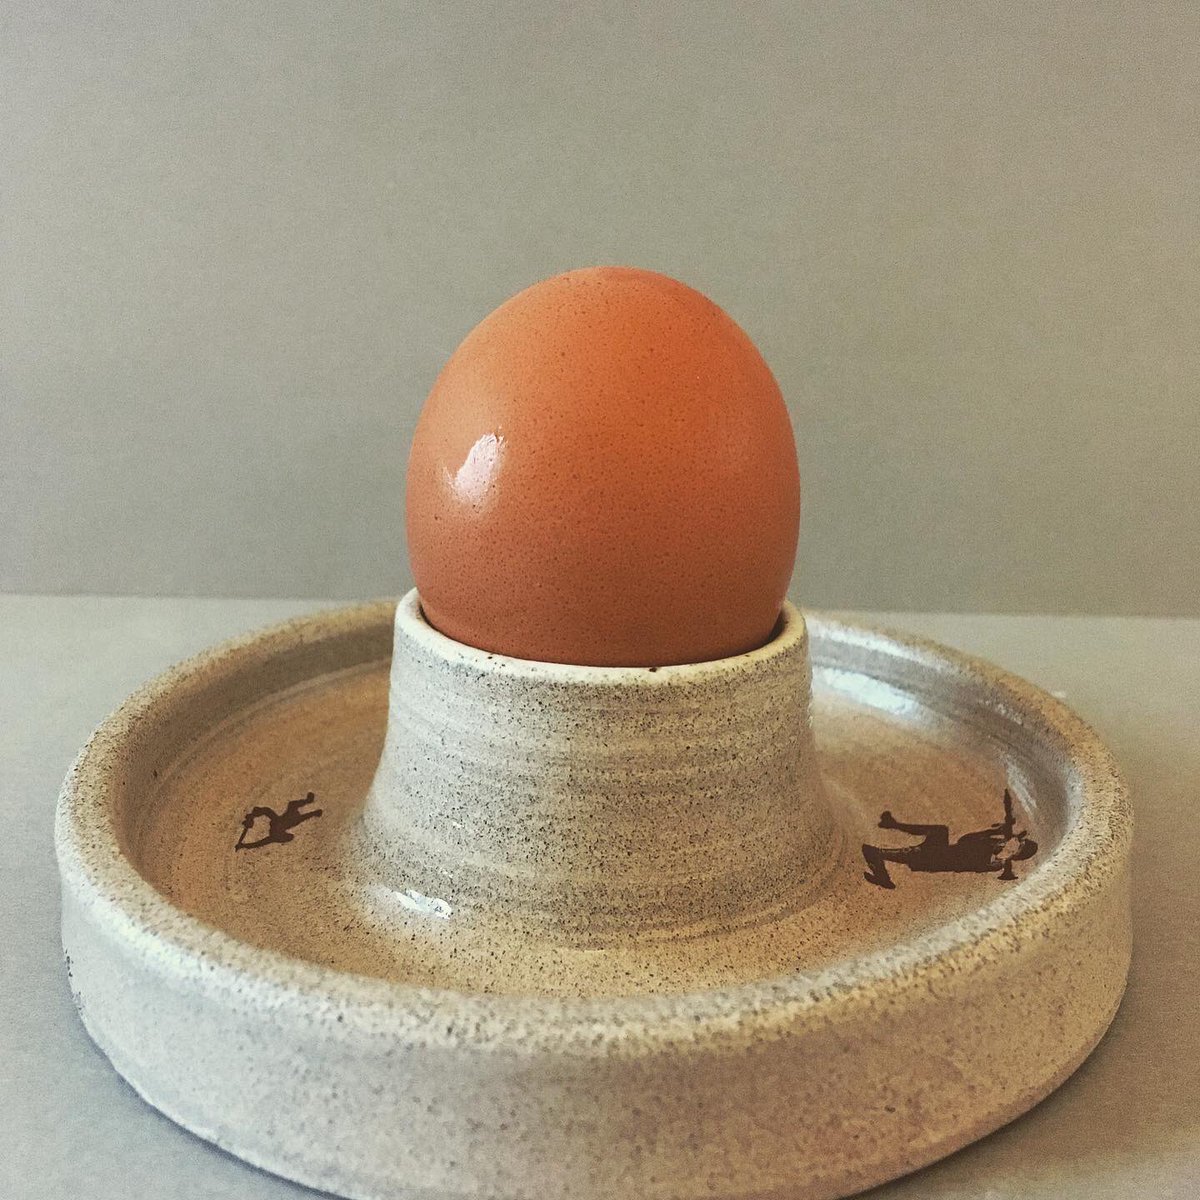 #egg #eggcups #tbch #thebritishcrafthouse #tbchboosters #groggedclay #grey #greyclay #boiledeggs #eggsndsoldiers 
thebritishcrafthouse.co.uk/product/egg-so…